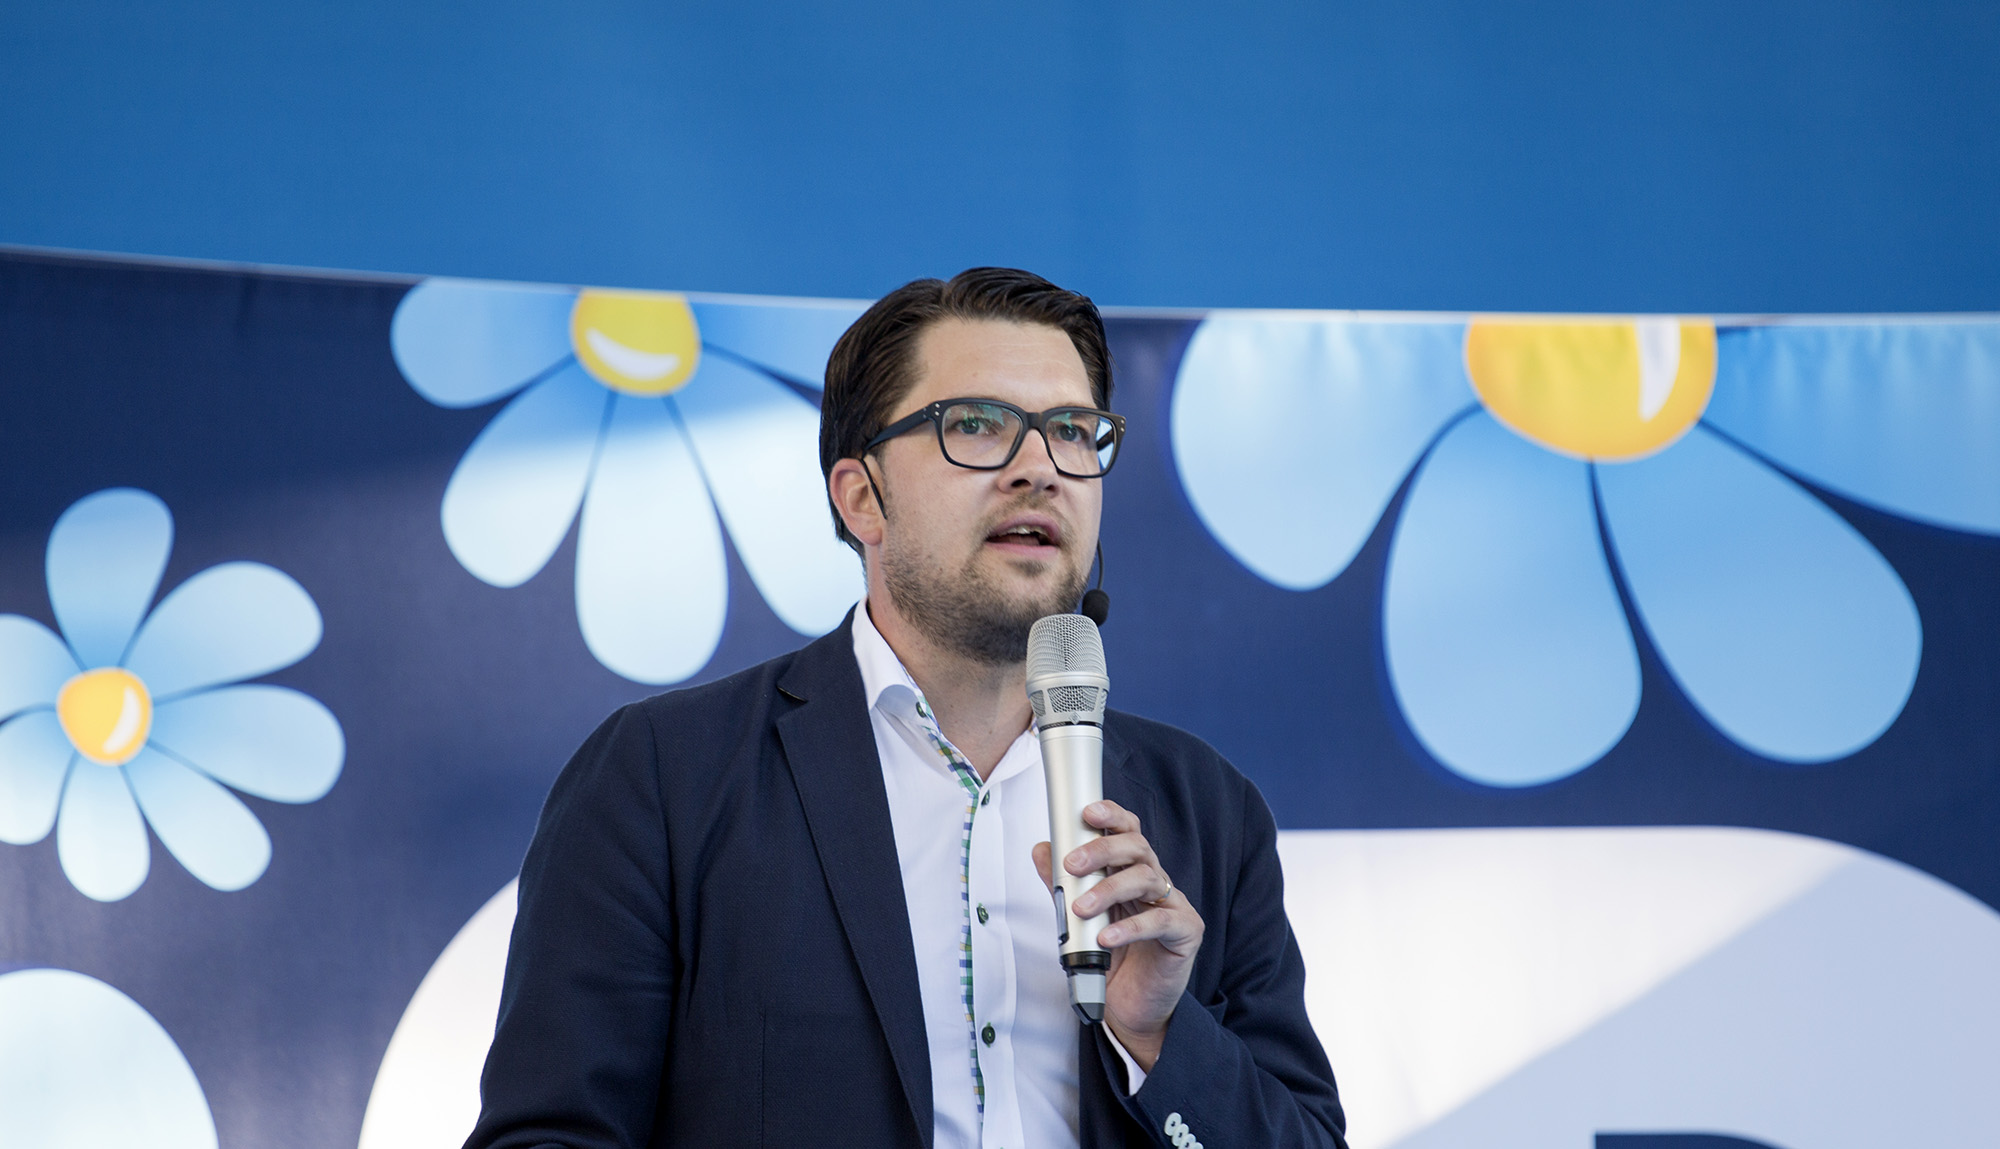 Jimmie Åkesson - authoritarian politician Sweden